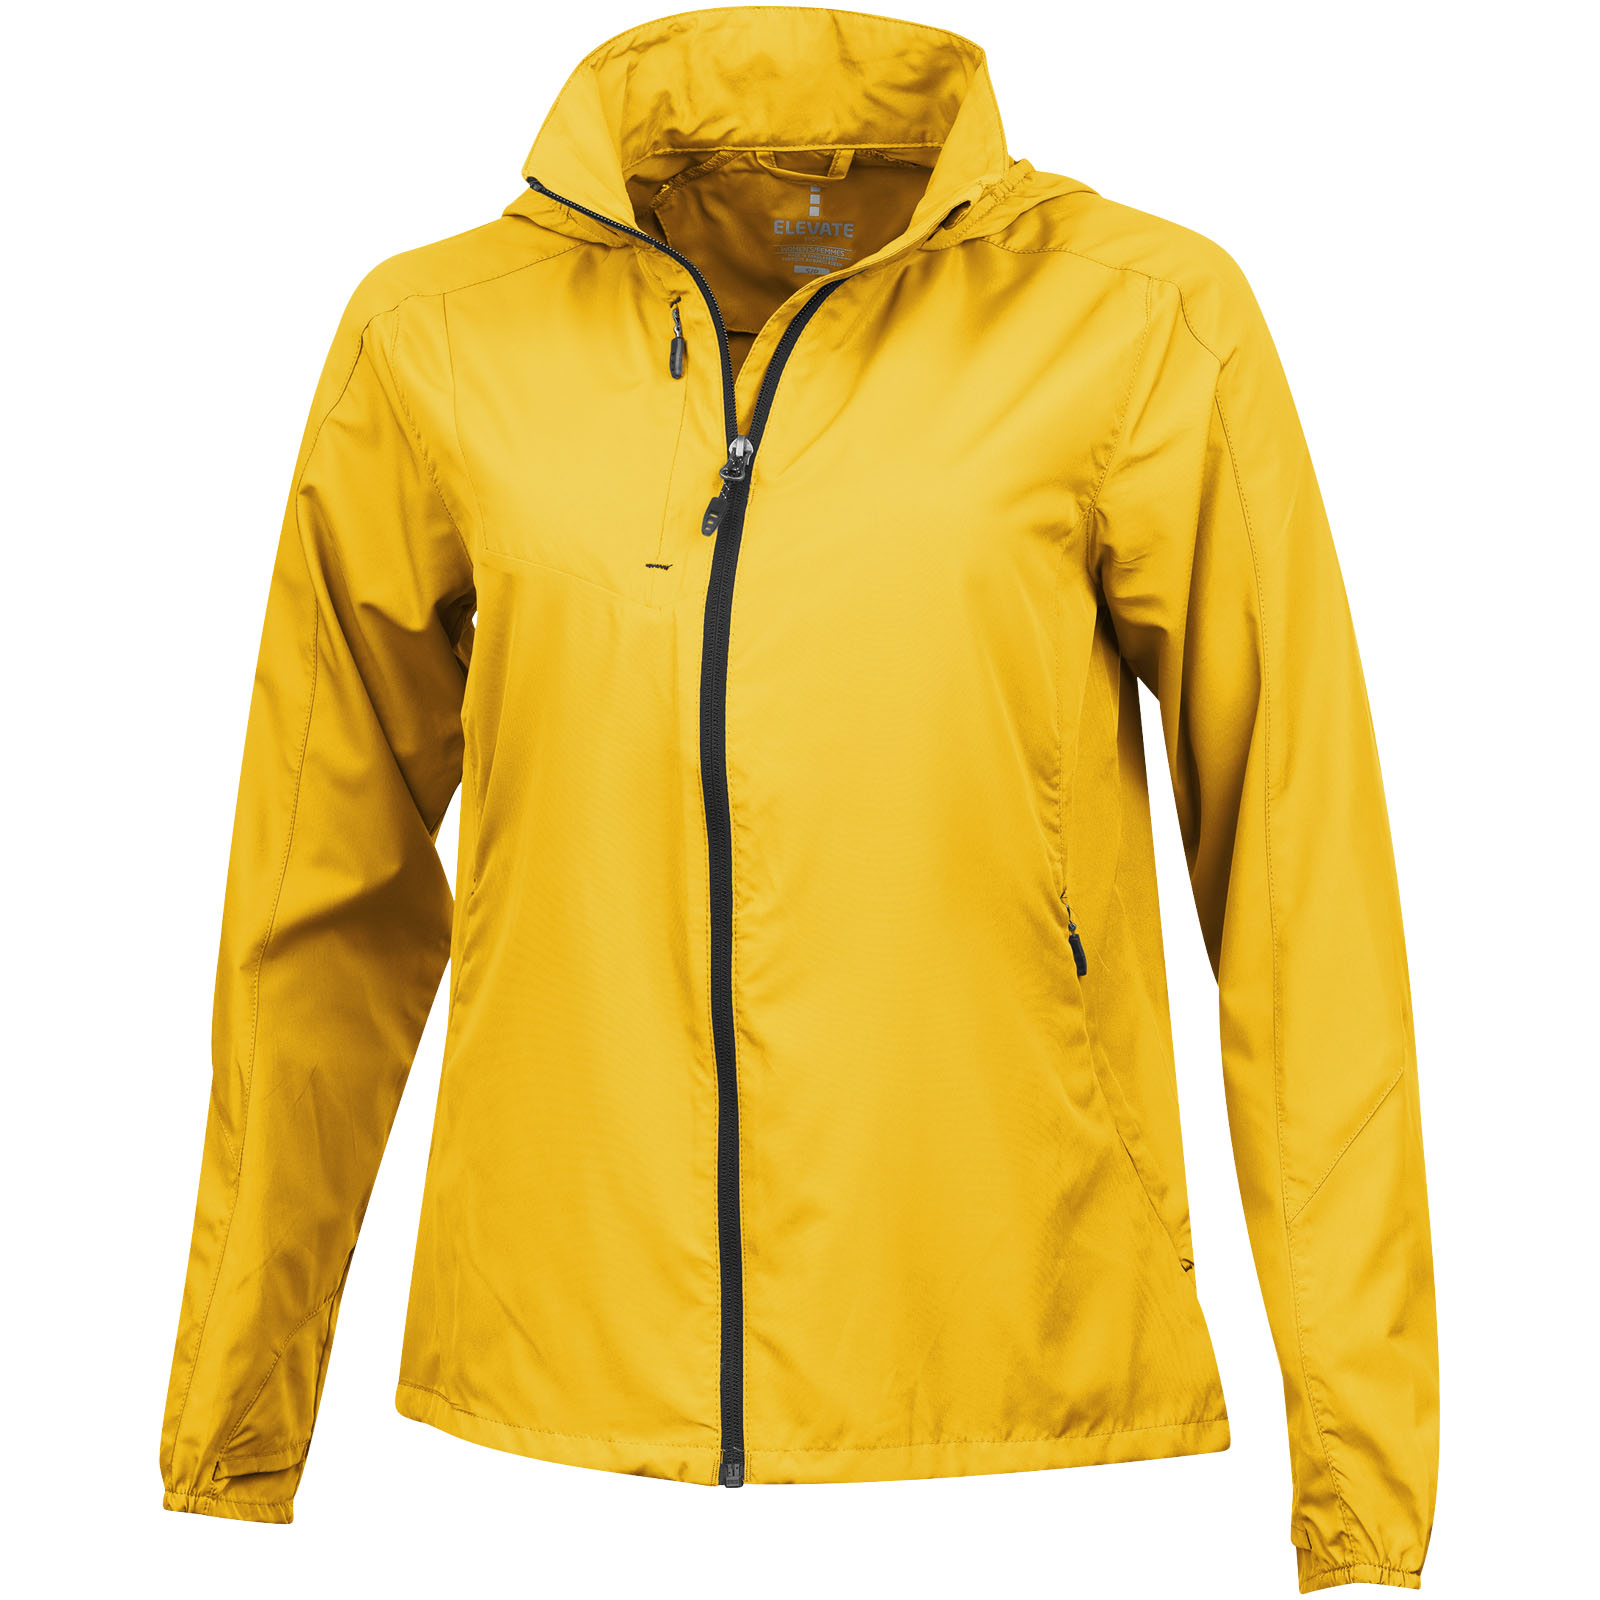 Waterproof Hooded Jacket - Branscombe - Weymouth